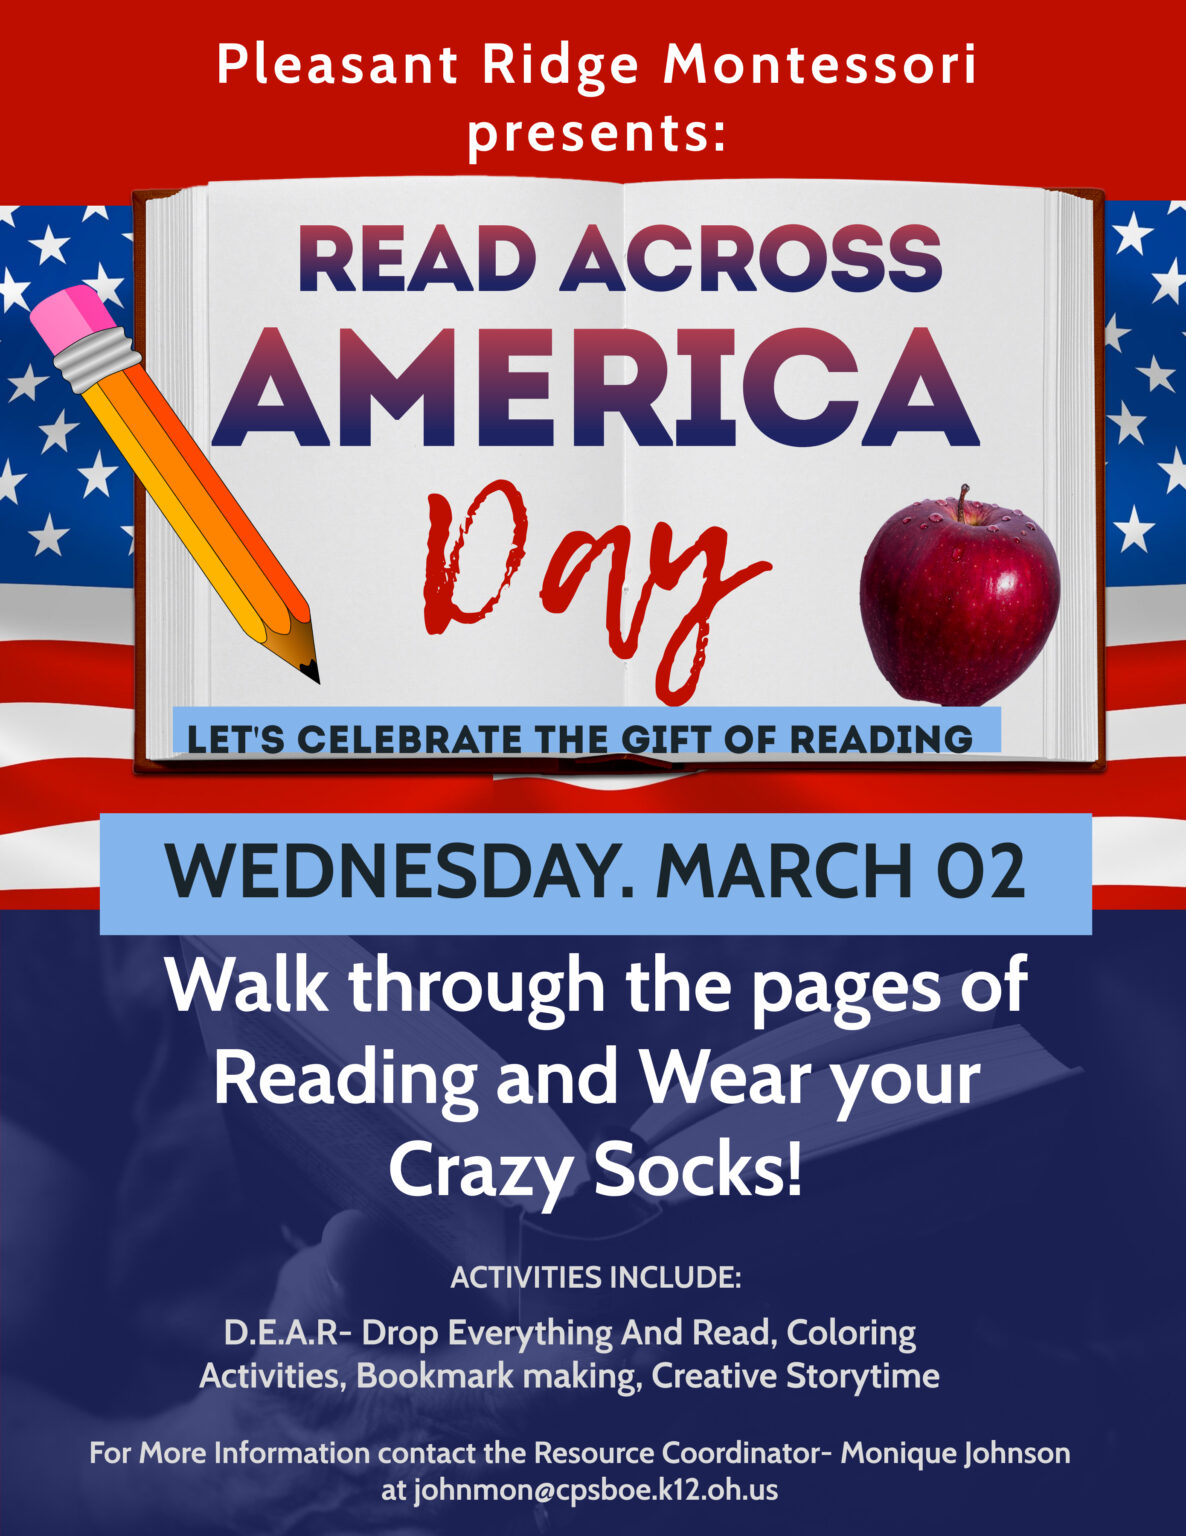 Read Across America Day launches Readathon!